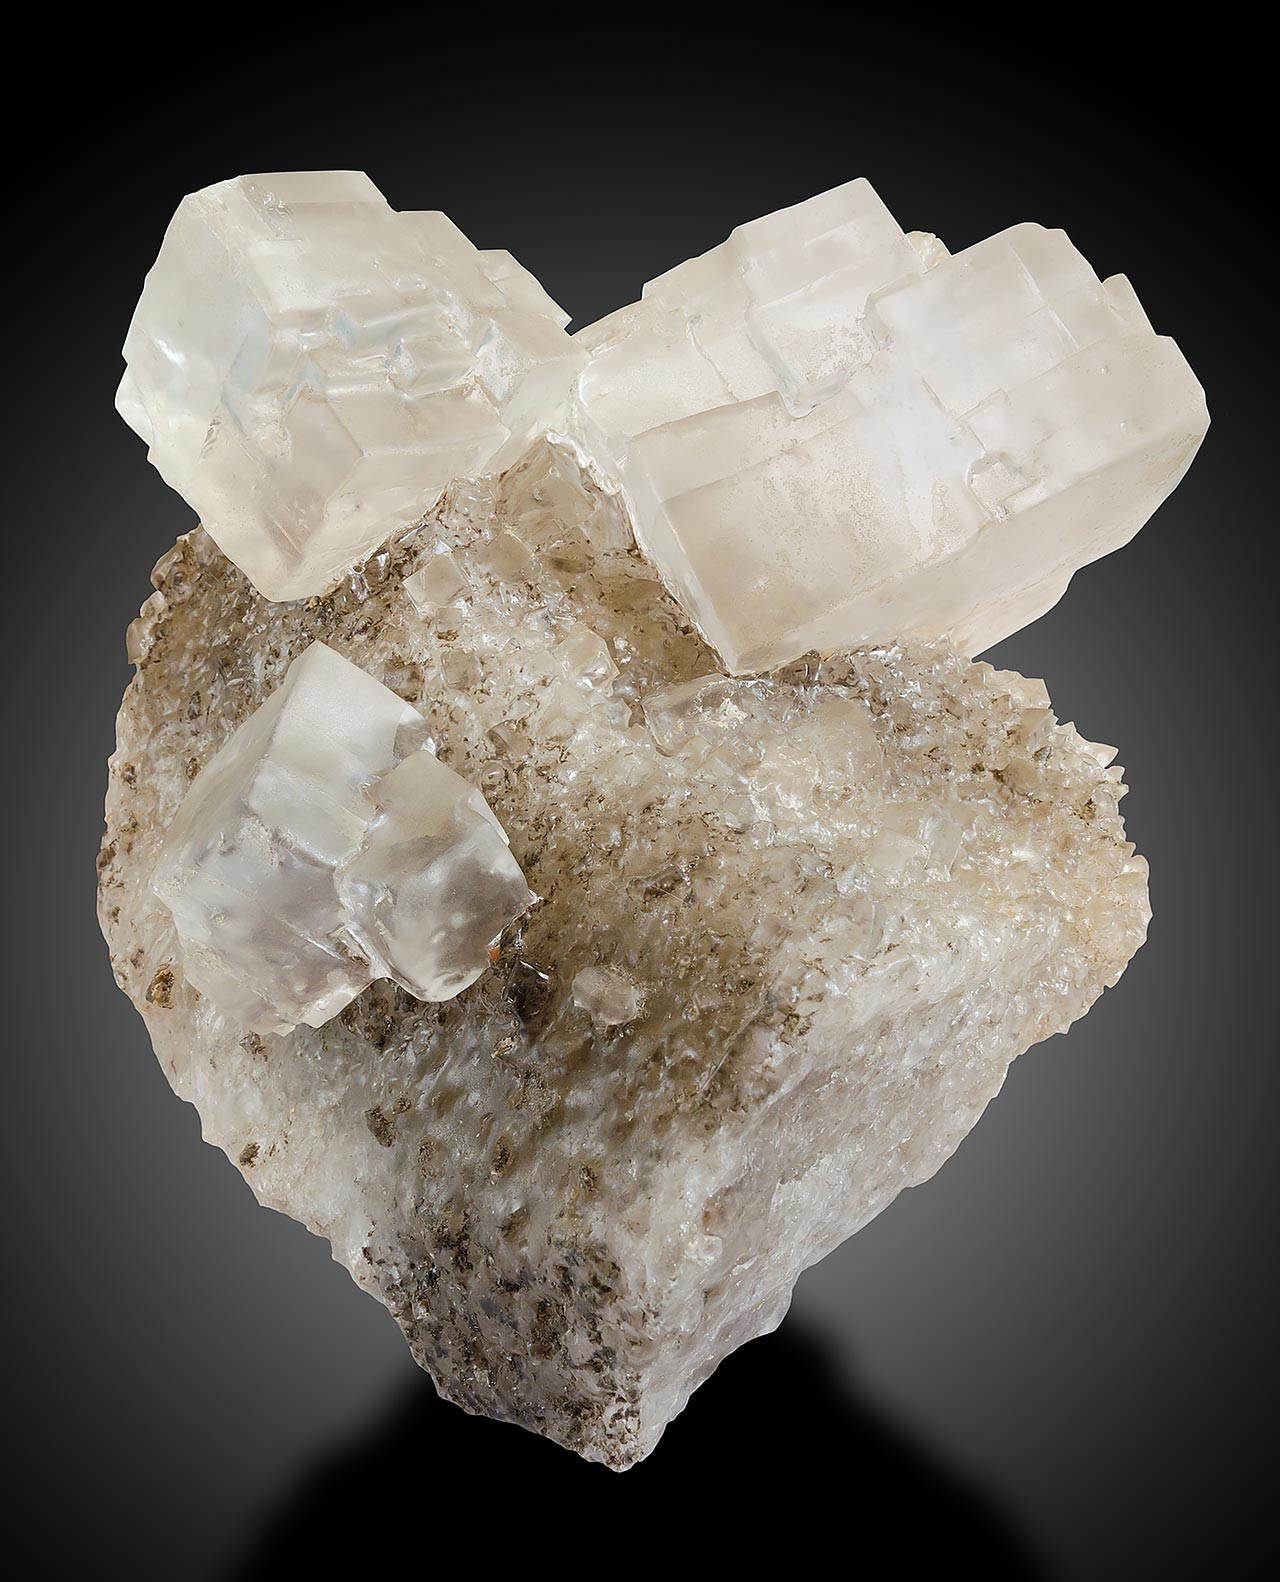 Huge cubic crystals of rock salt (halite) on salt matrix from Inowroclaw, Poland